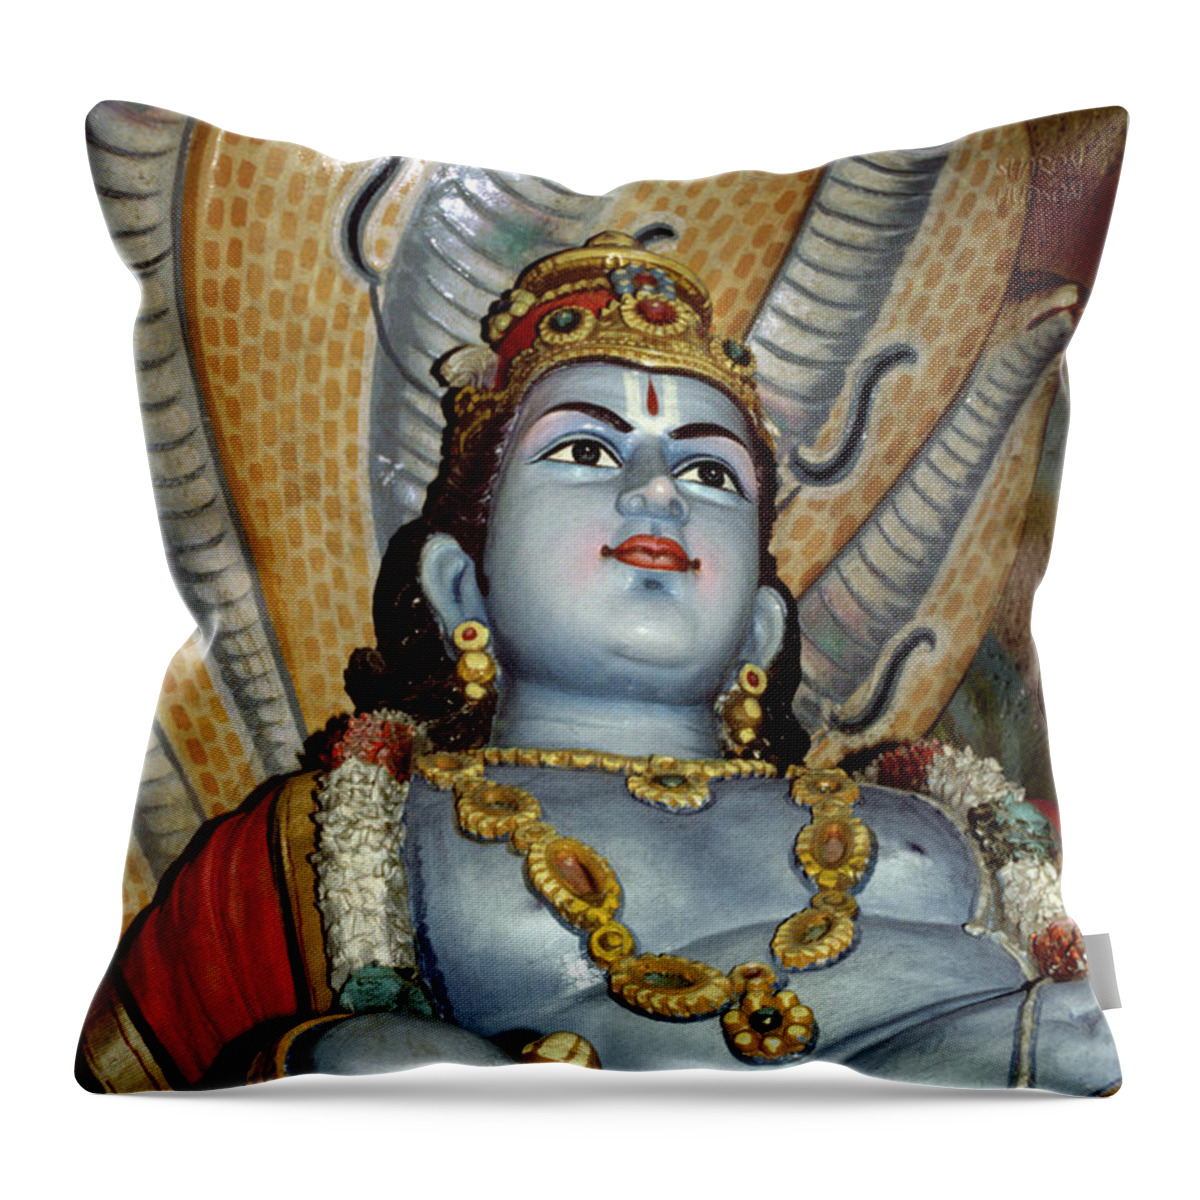 Vishnu Throw Pillow featuring the photograph Batu Caves sculpture - Lord Vishnu by Sharon Hudson